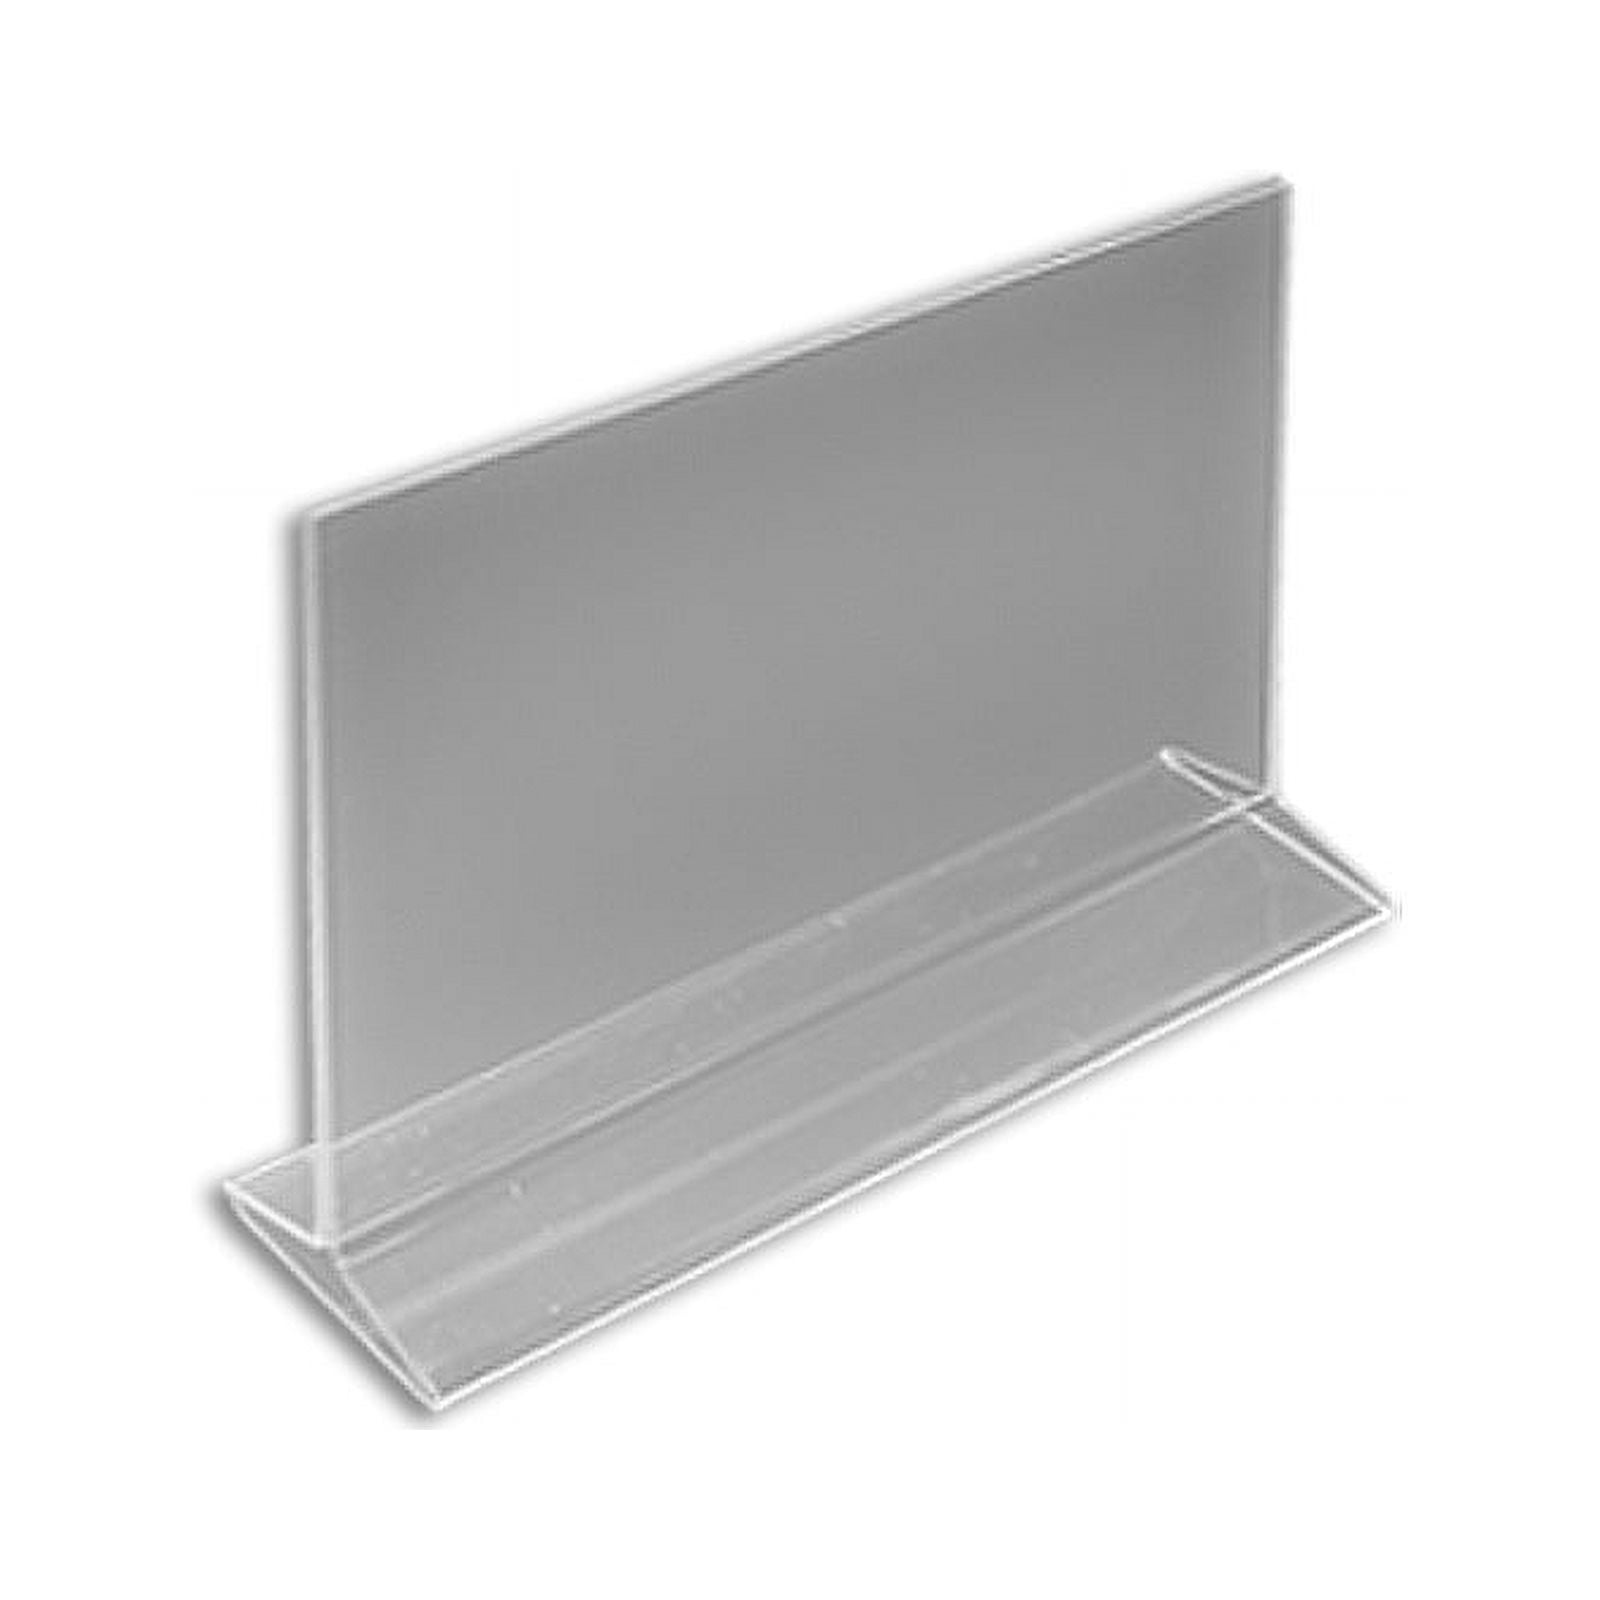 Azar Displays 142715 Top Loading Clear Acrylic T-Frame Sign Holder 8.5